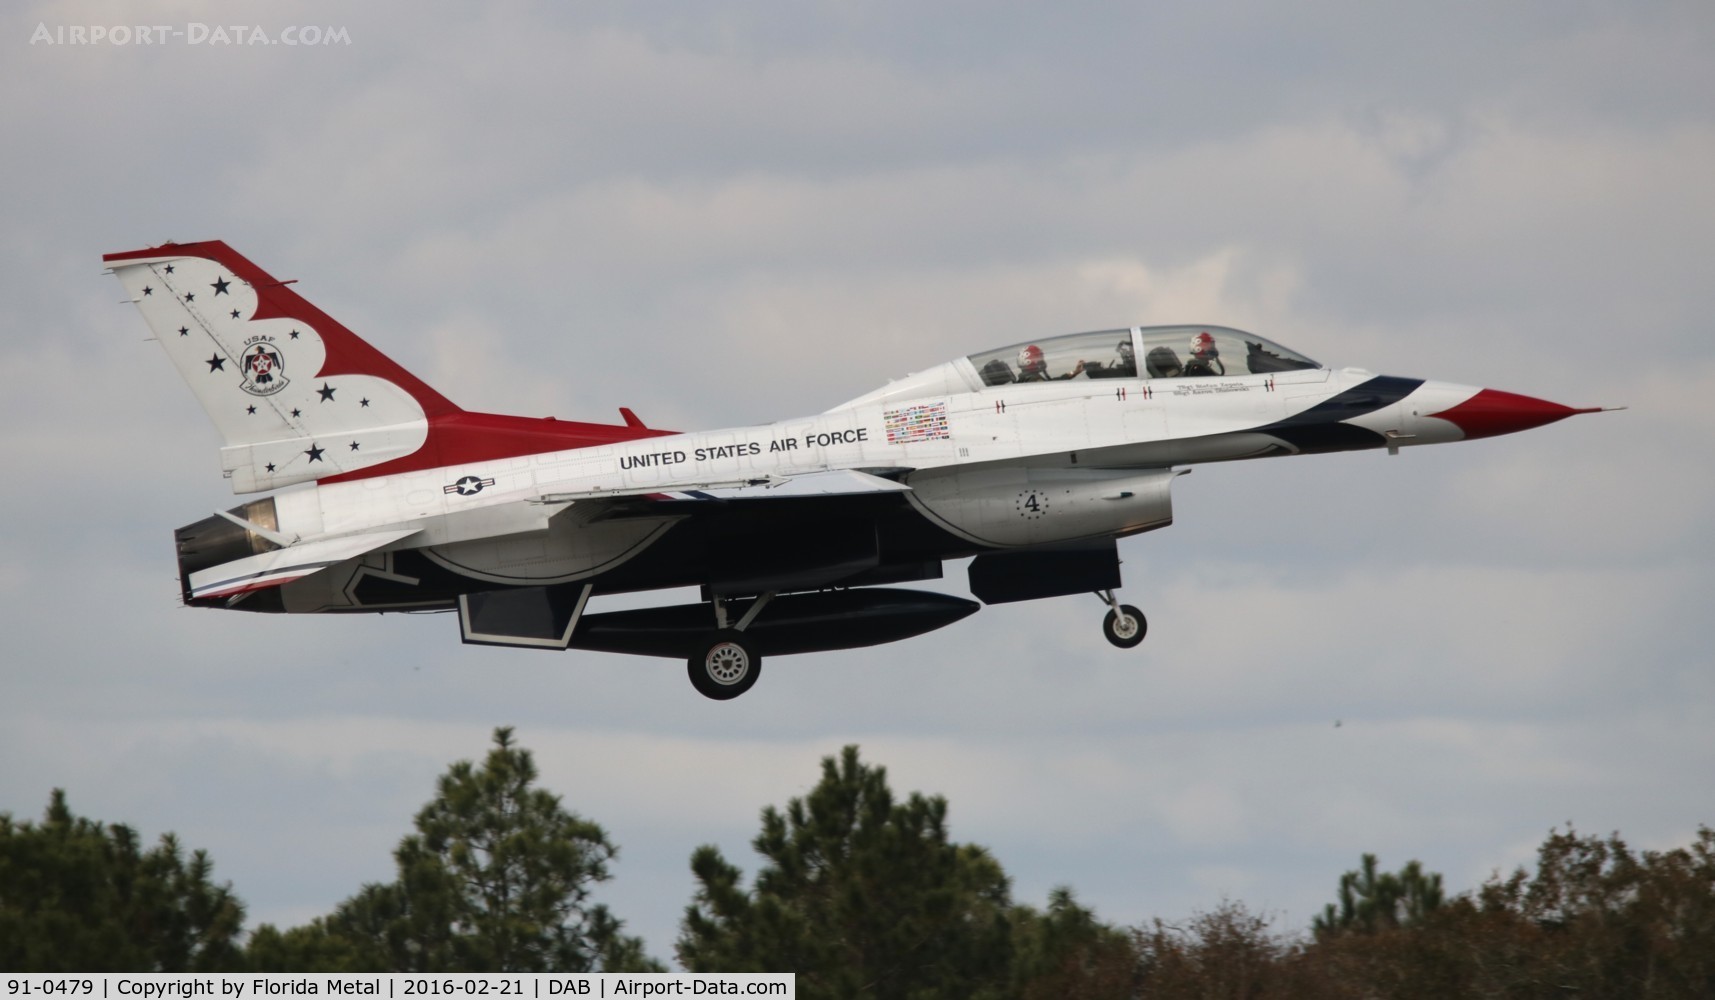 91-0479, 1991 General Dynamics F-16D Fighting Falcon C/N CD-34, Thunderbirds